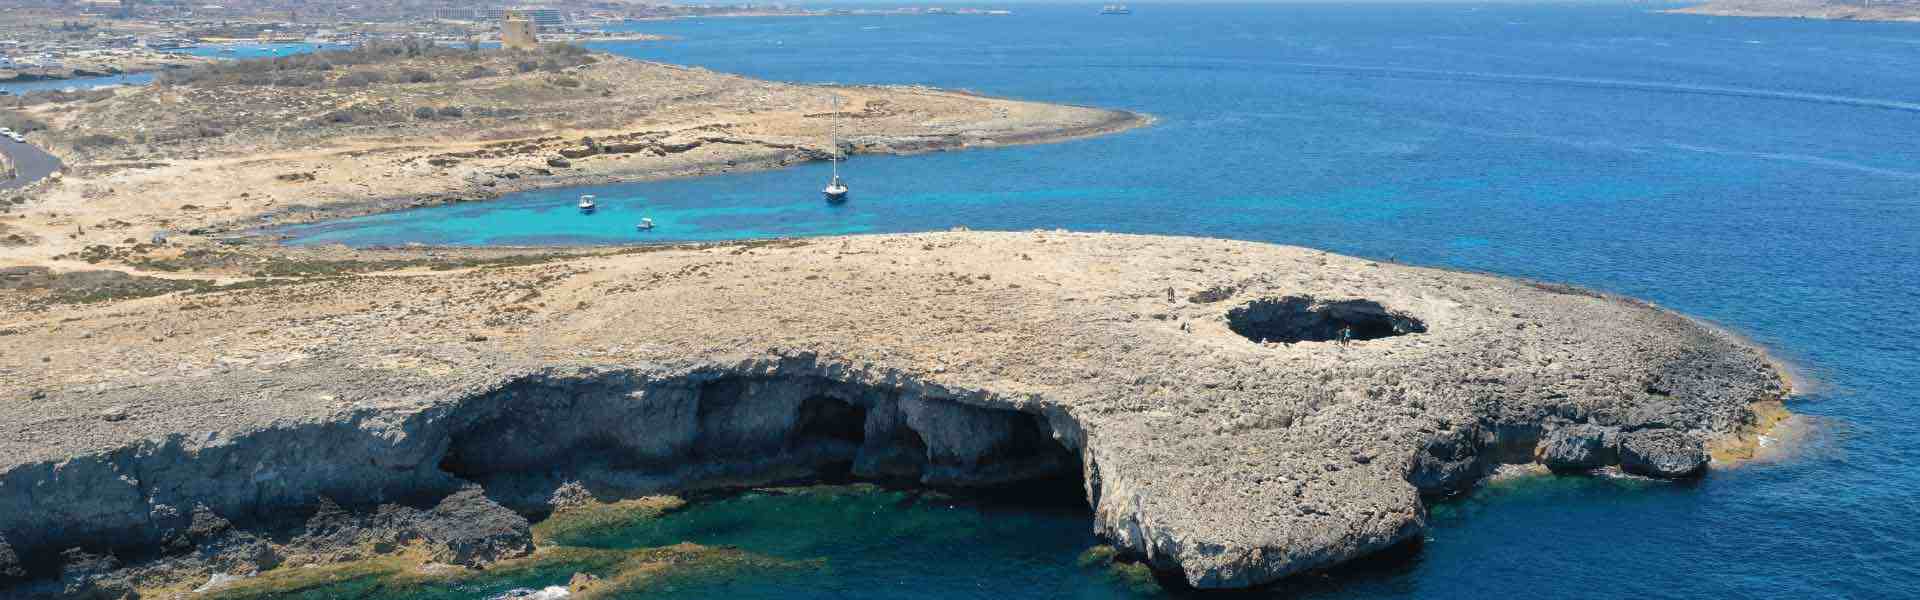 coral lagoon malta